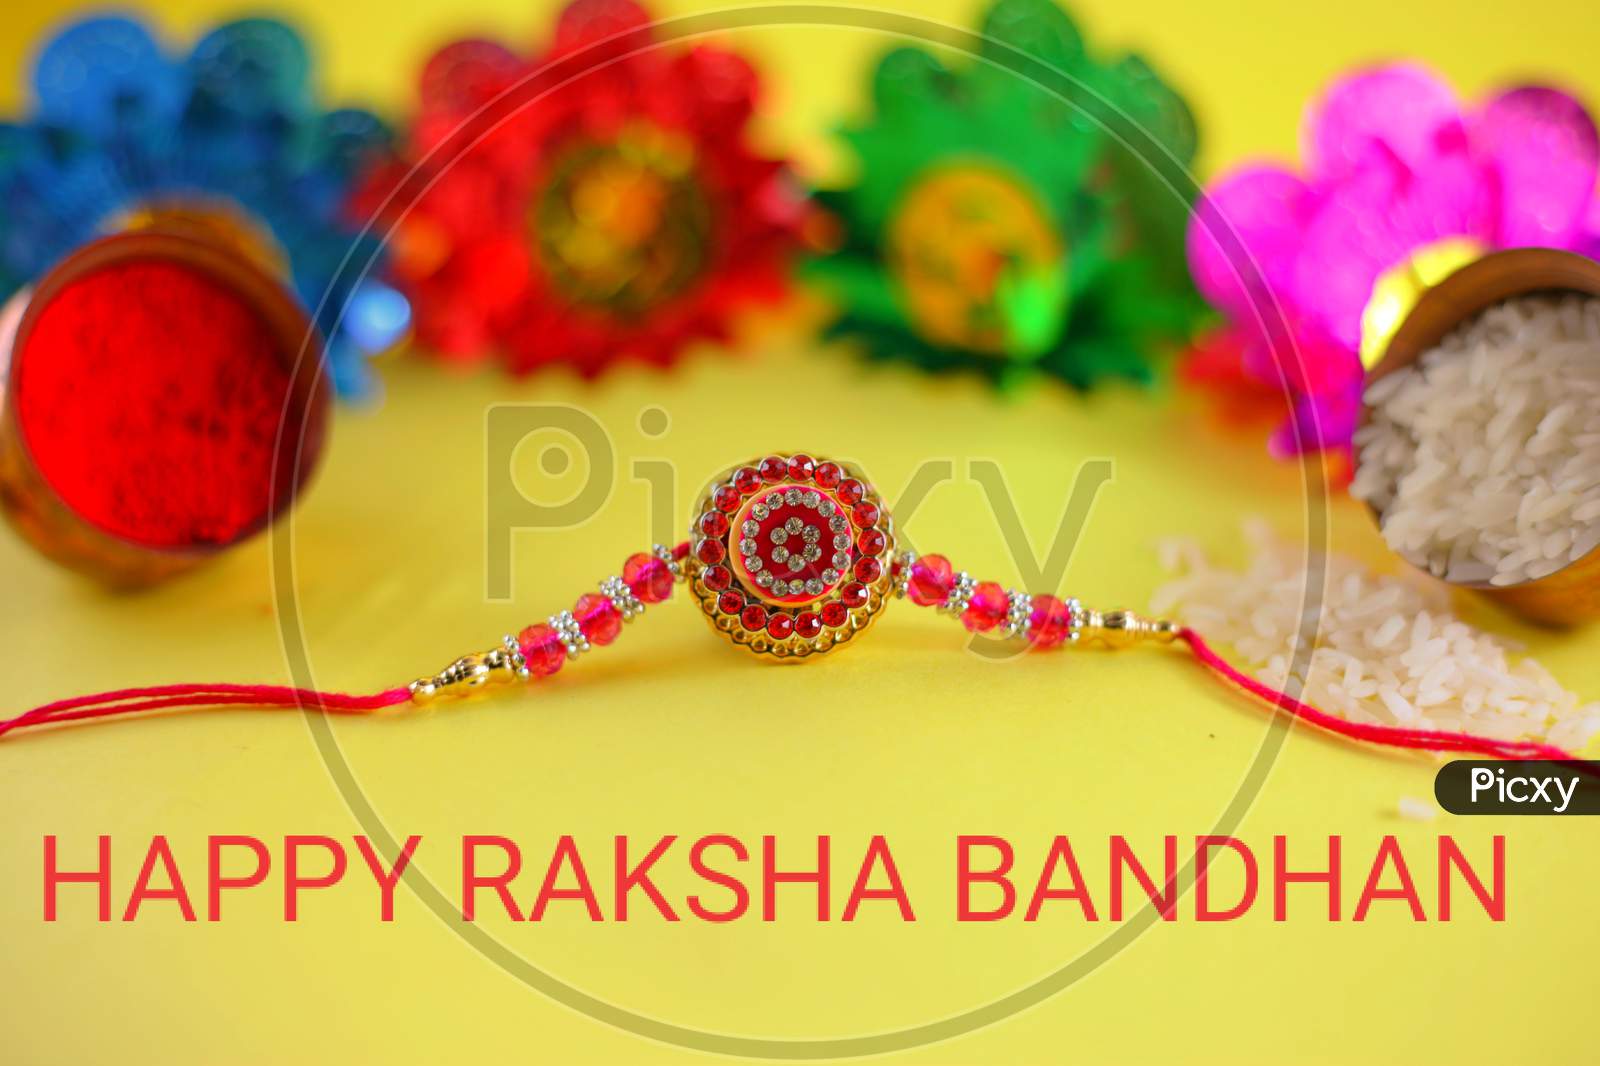 Rakshabandhan, the traditional festival of India